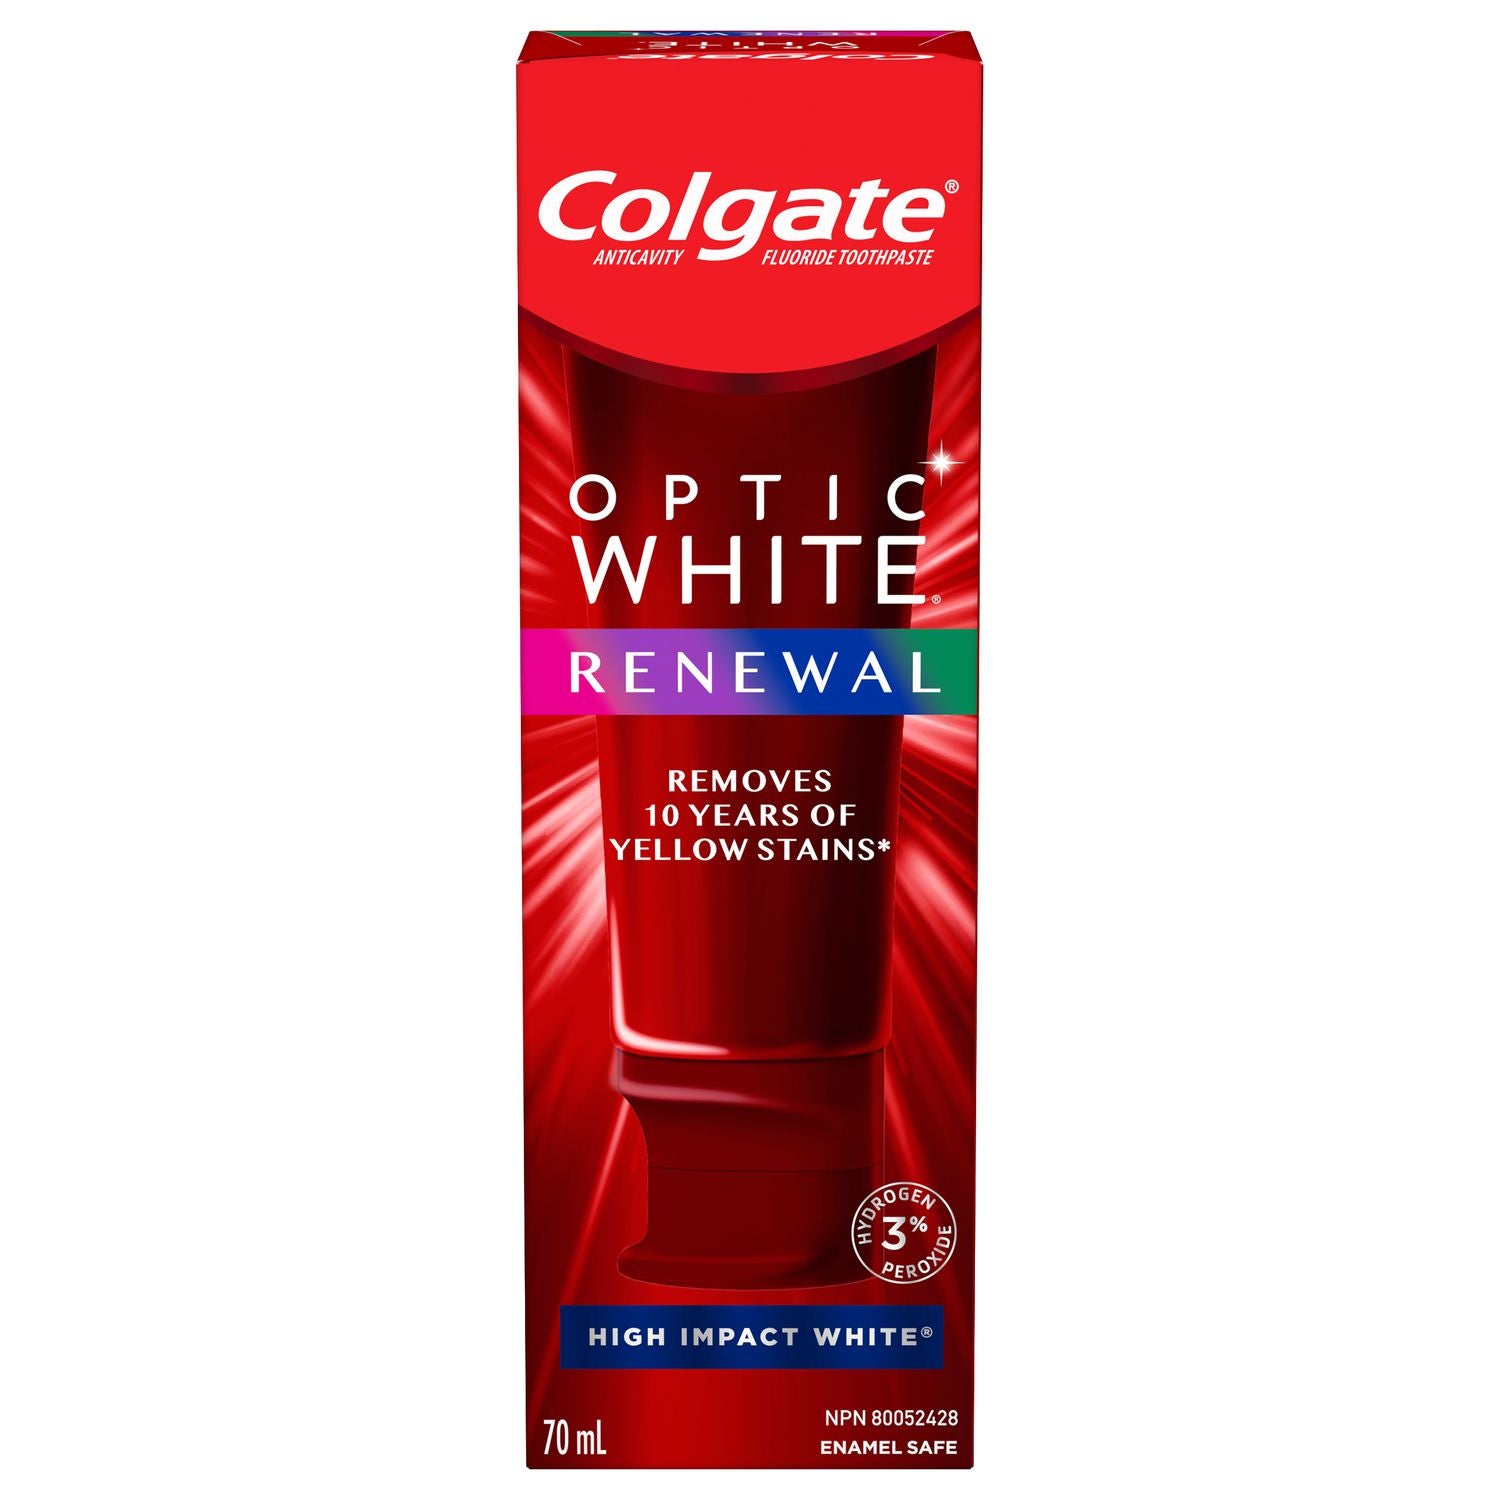 Colgate Optic White Renewal 70ml